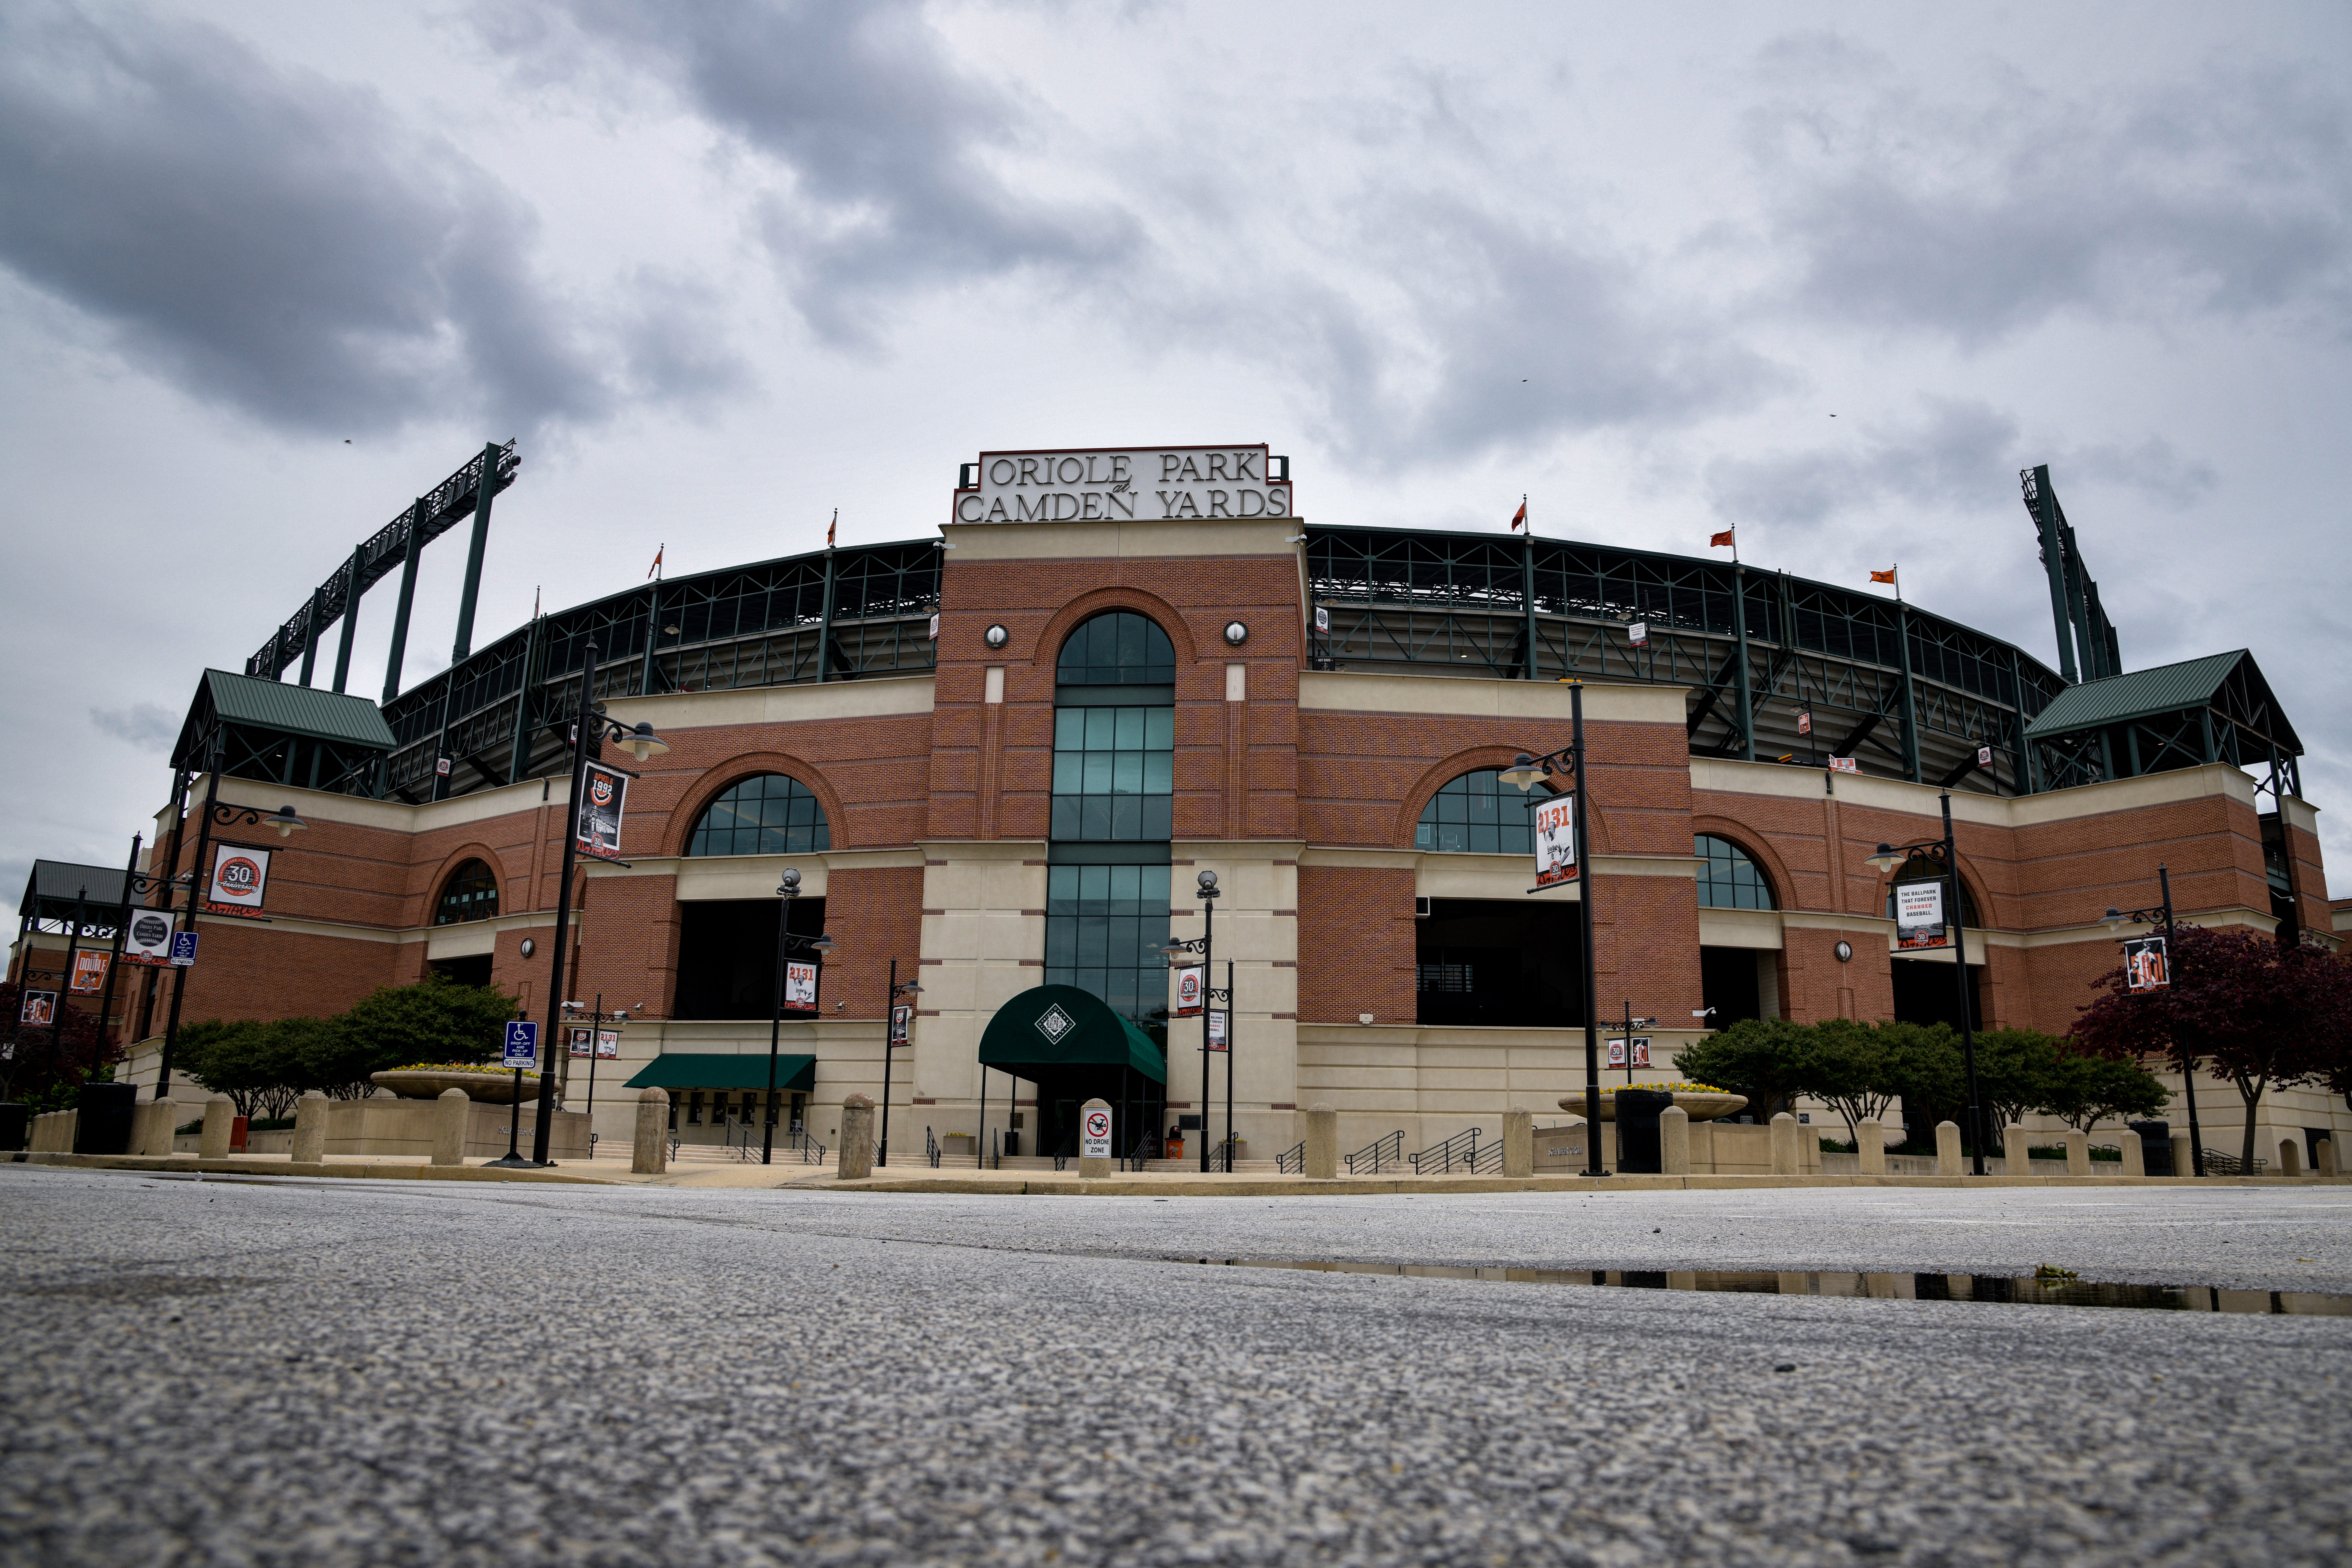 Baltimore Orioles decline Camden Yards lease extension - SportsPro